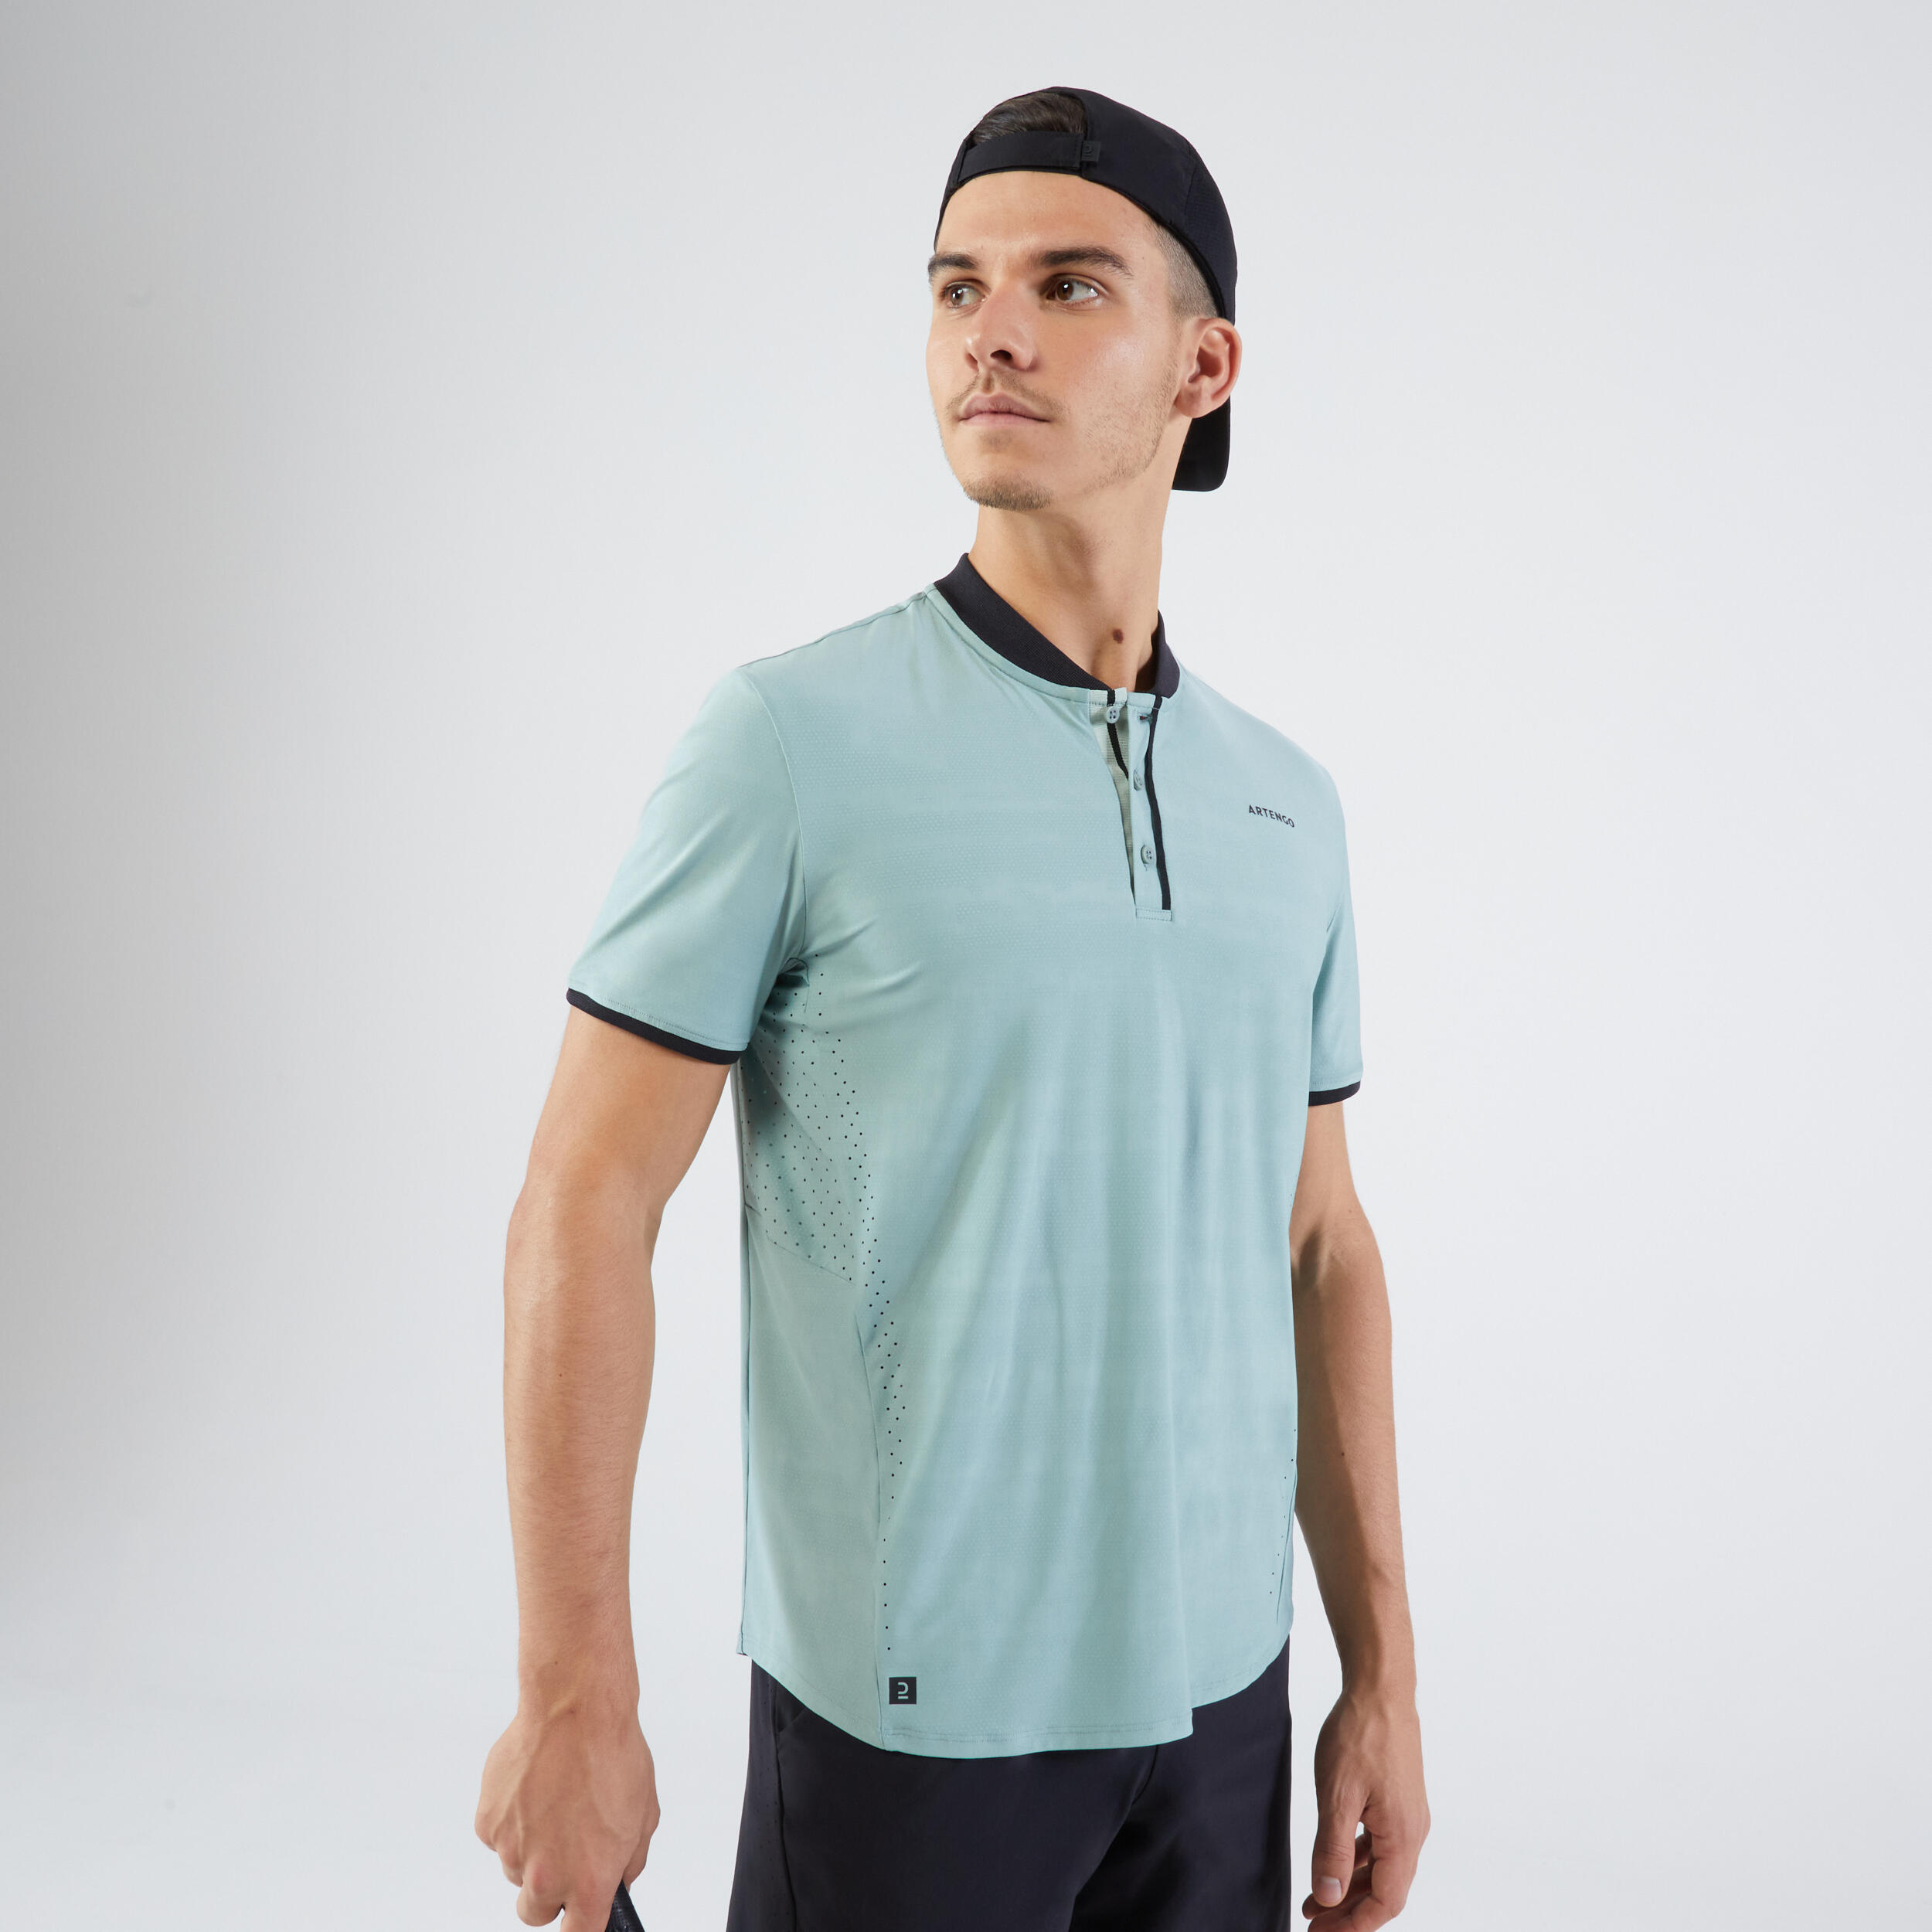 ARTENGO Men's Short-Sleeved Tennis T-Shirt DRY+ - Greyish Green